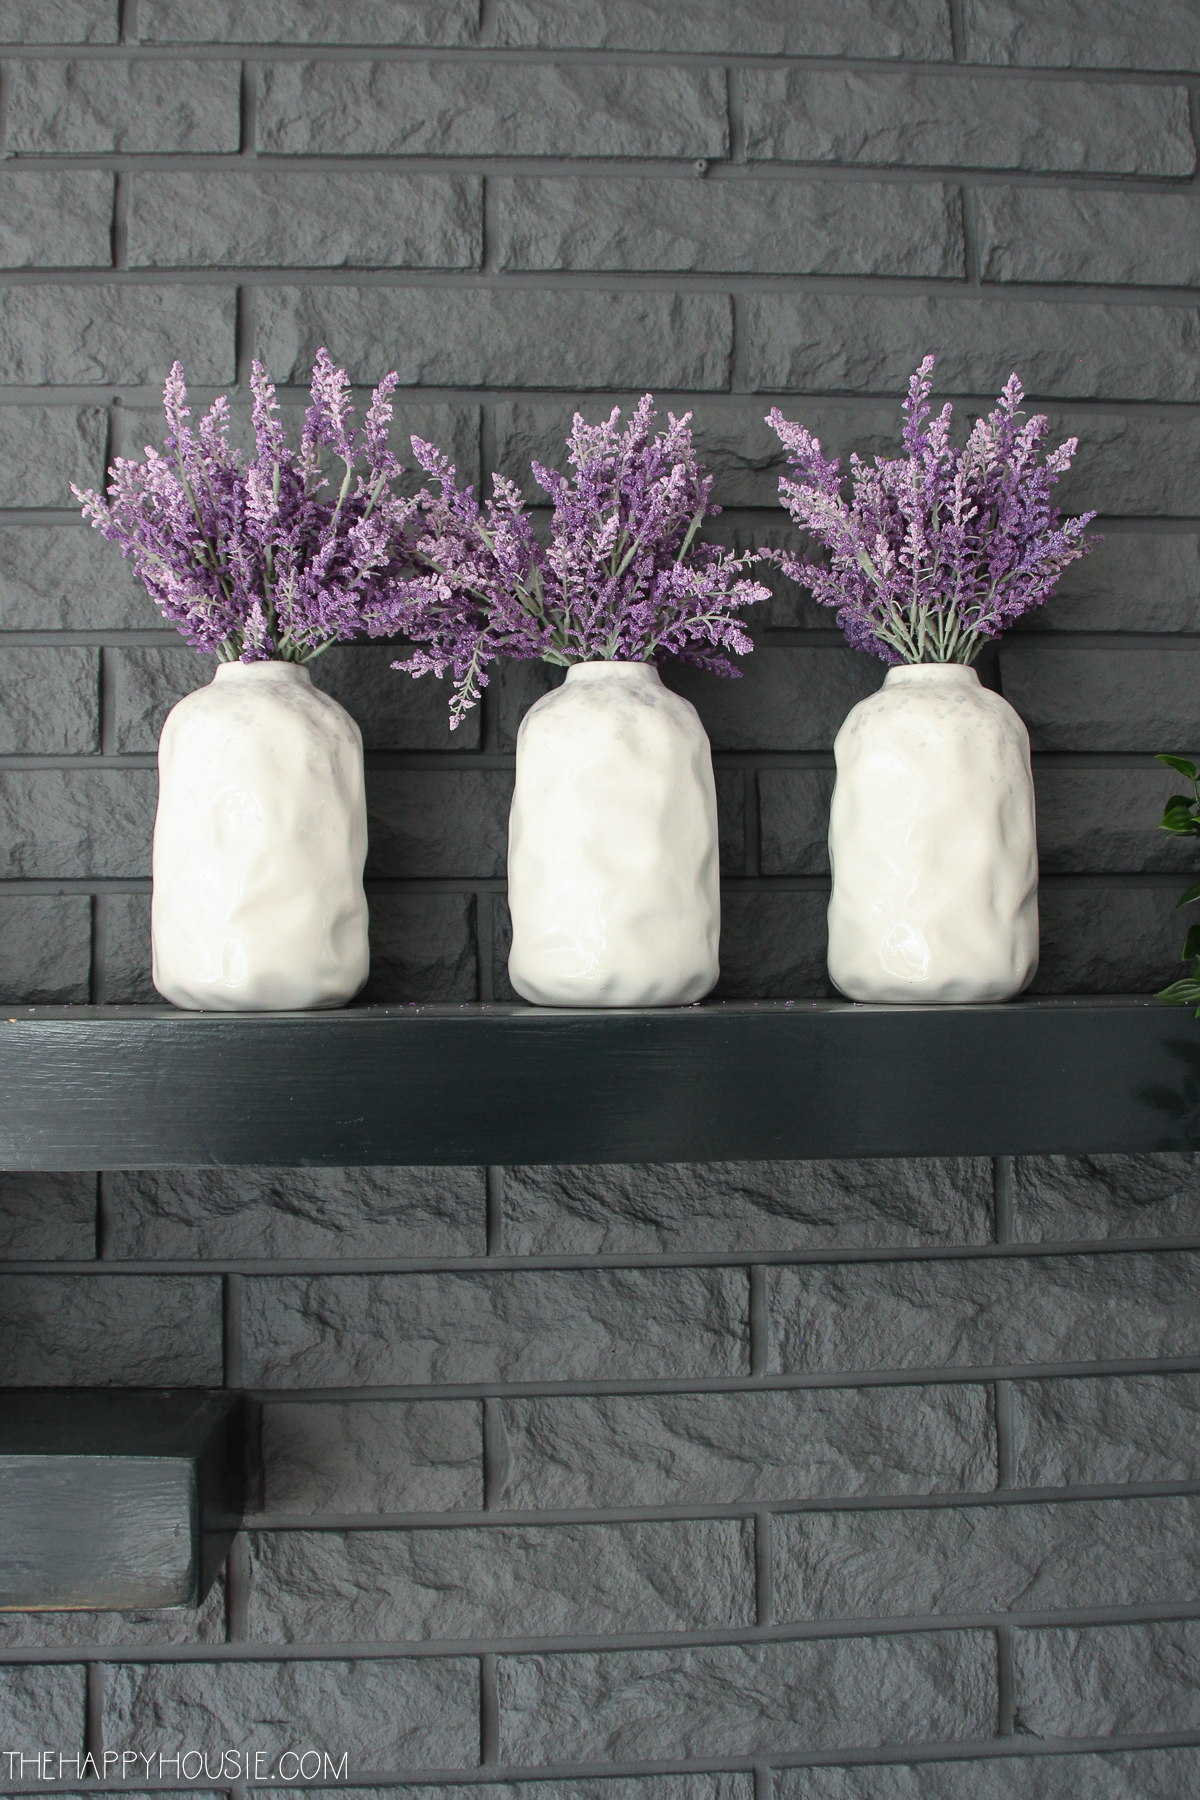 Lavender in white vases on the mantel.